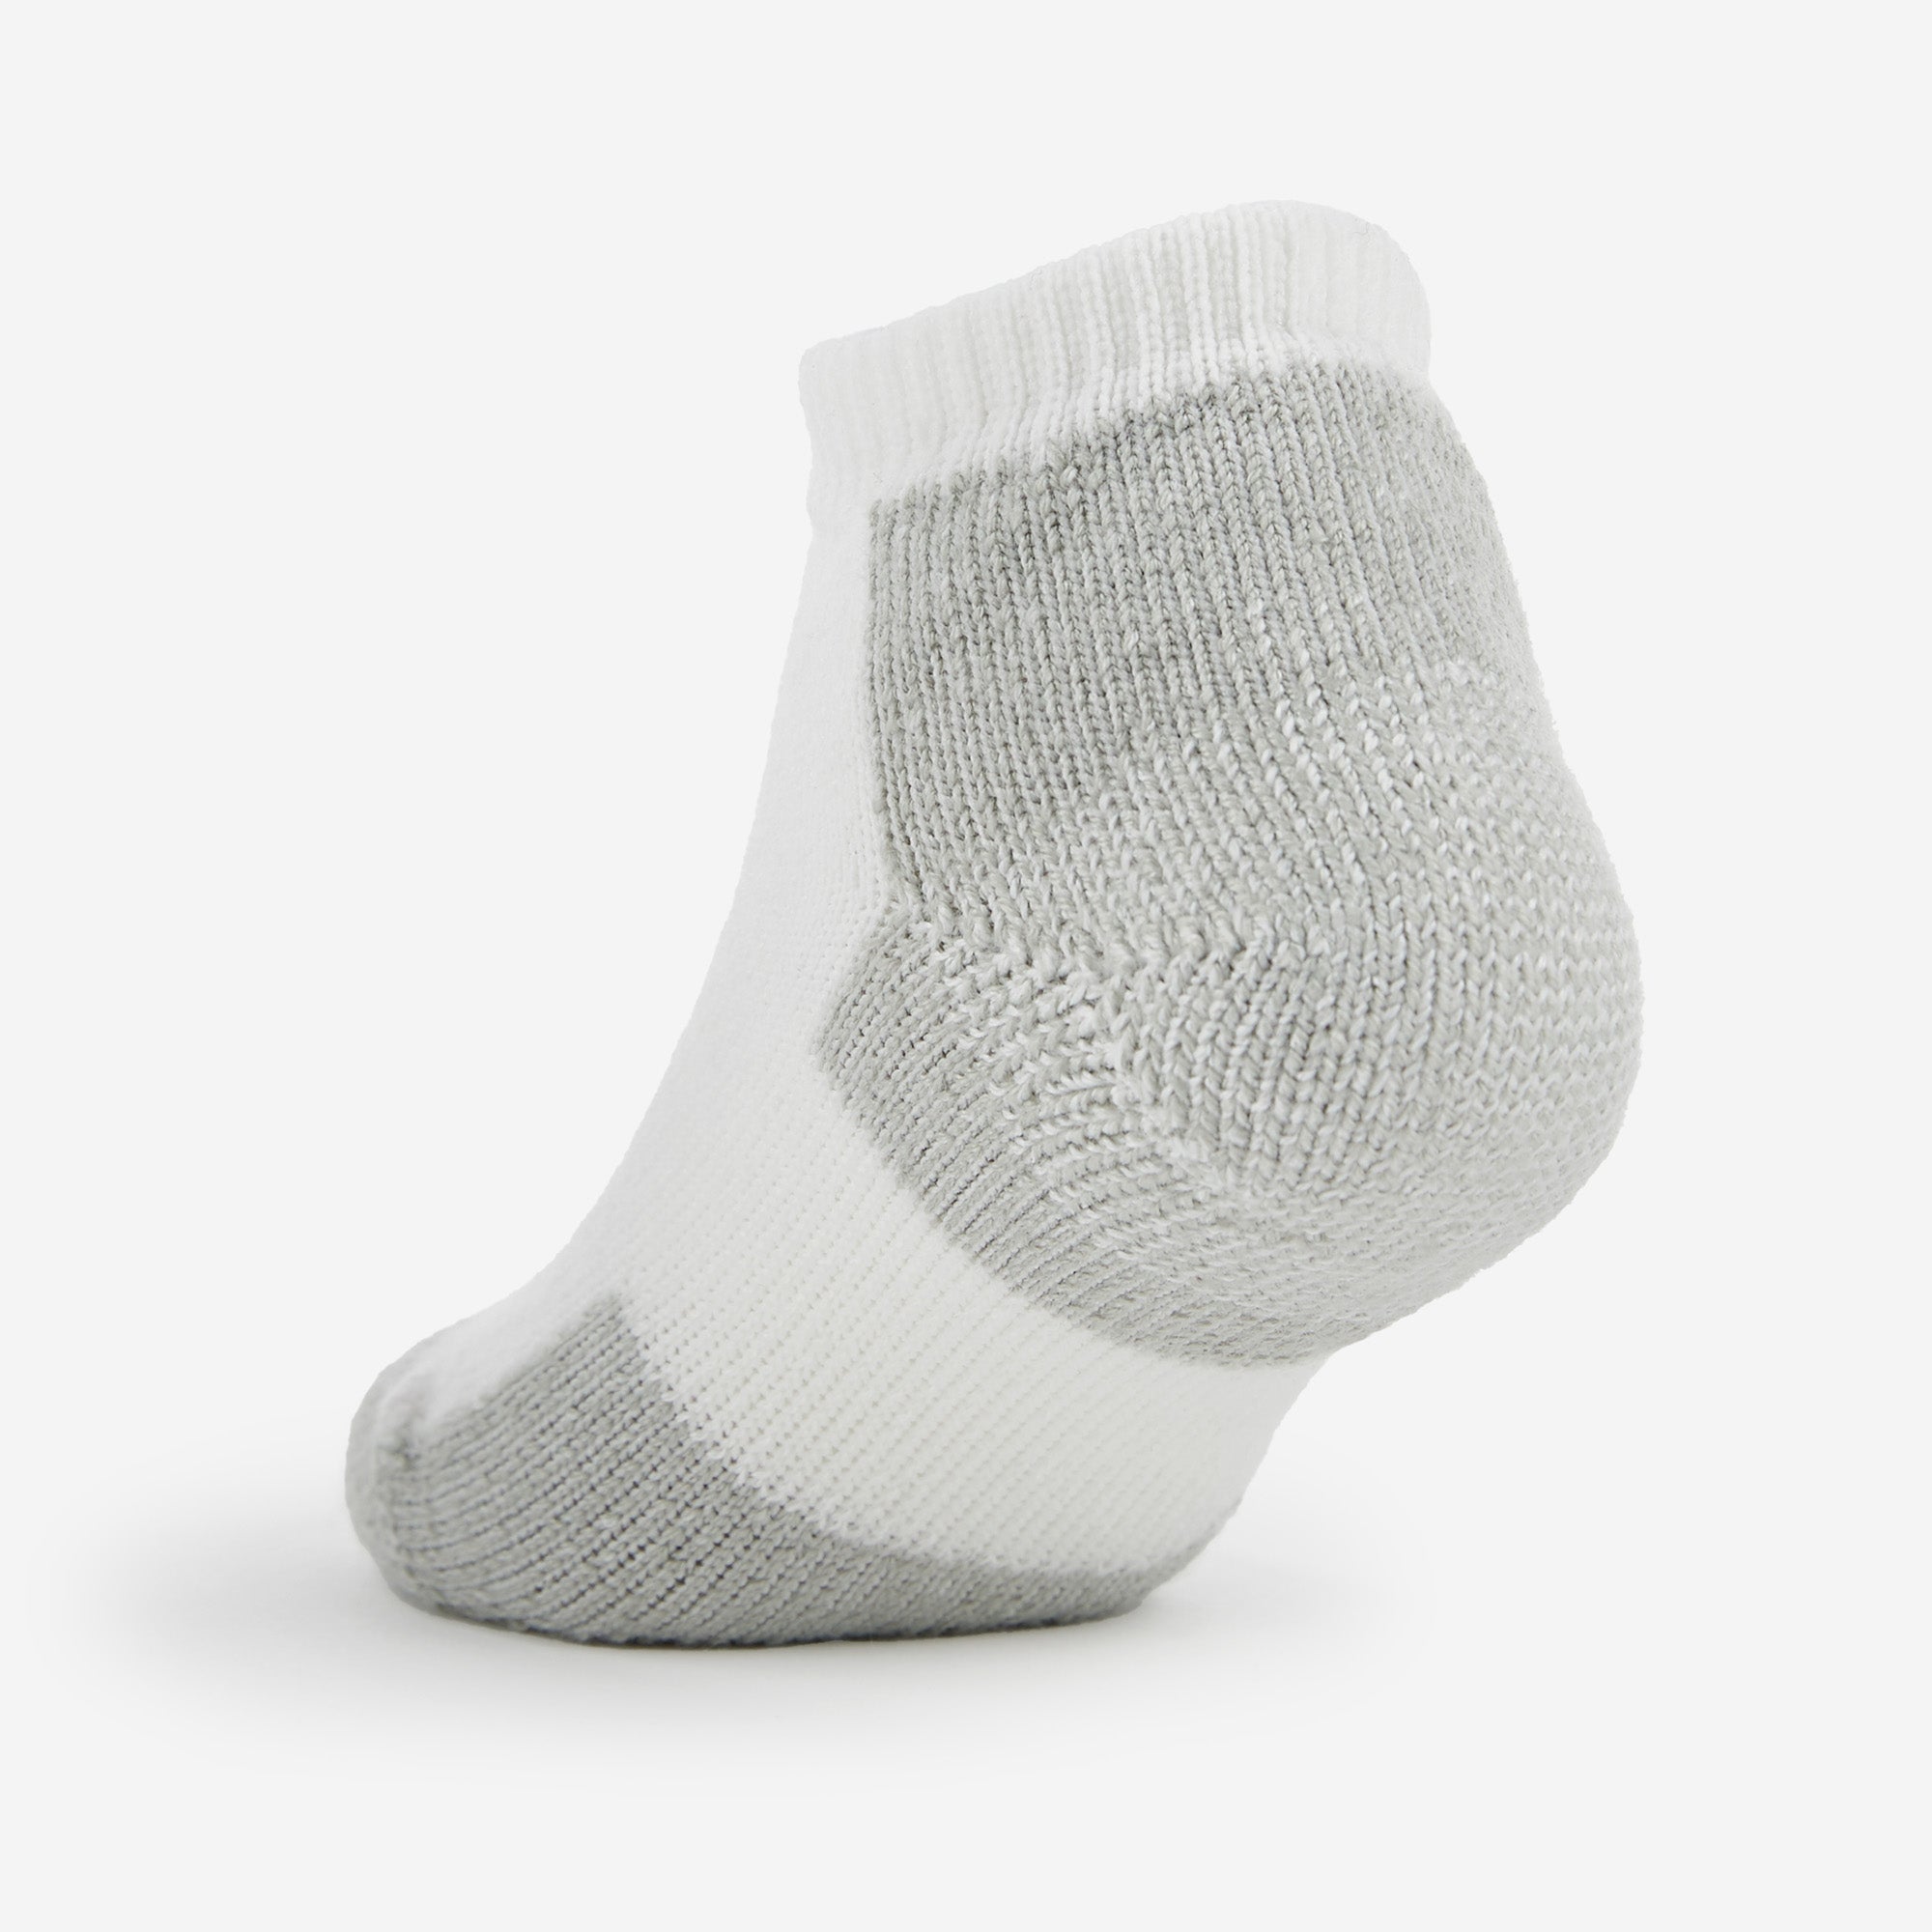 Maximum Cushion Low-Cut Running Socks (3 Pairs) Thorlo